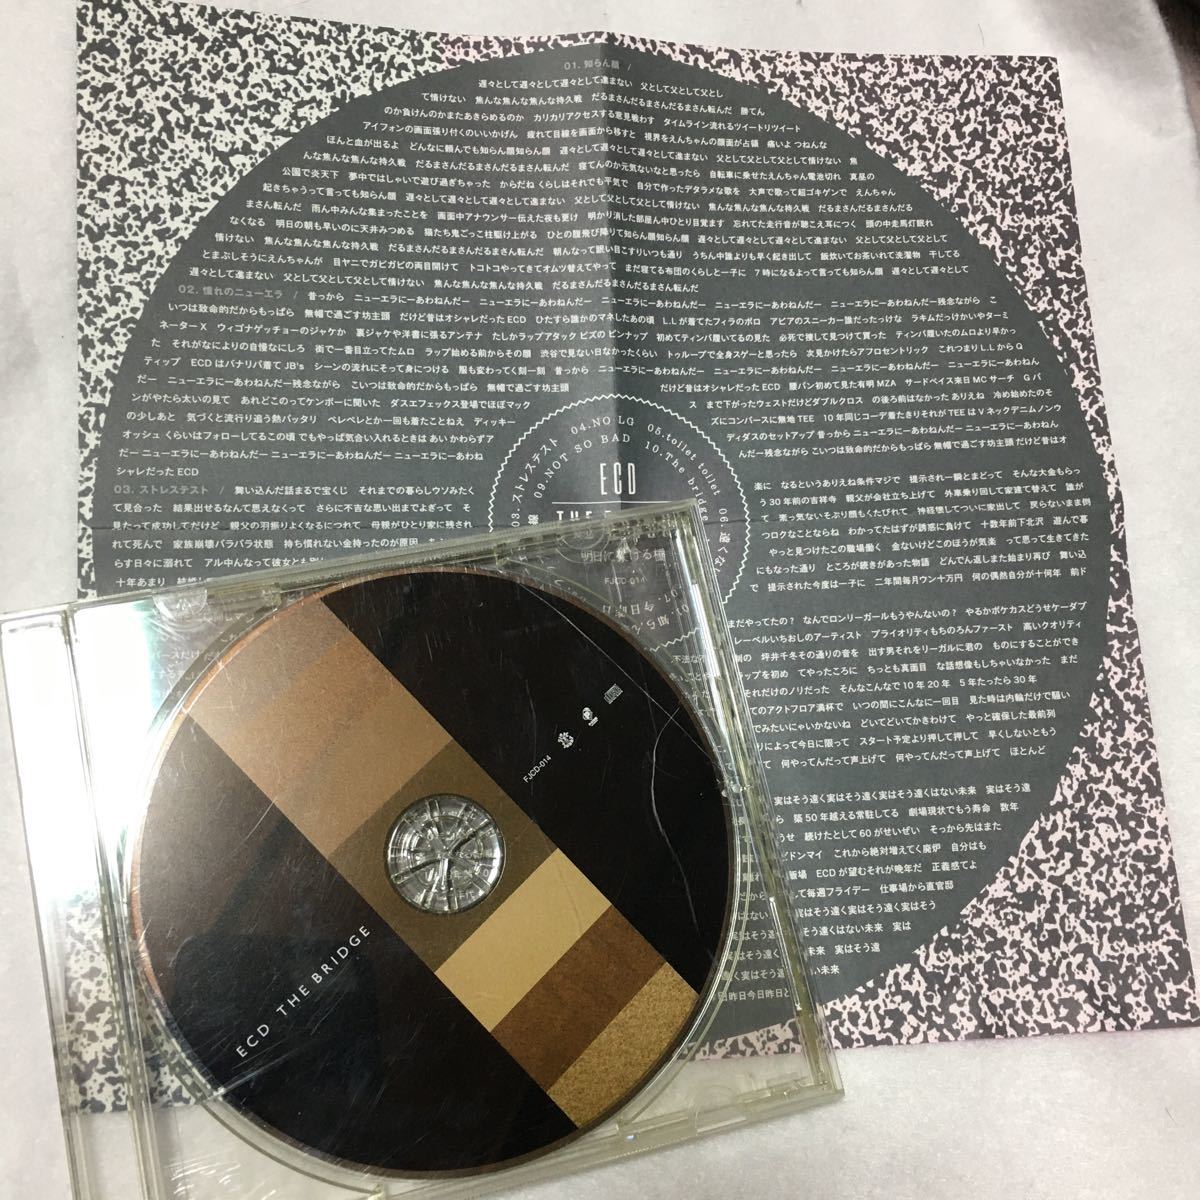 ECD The Bridge 明日に架ける橋 CD TR-808 ヒップホップ illict tsuboi 歌詞カード アルバム